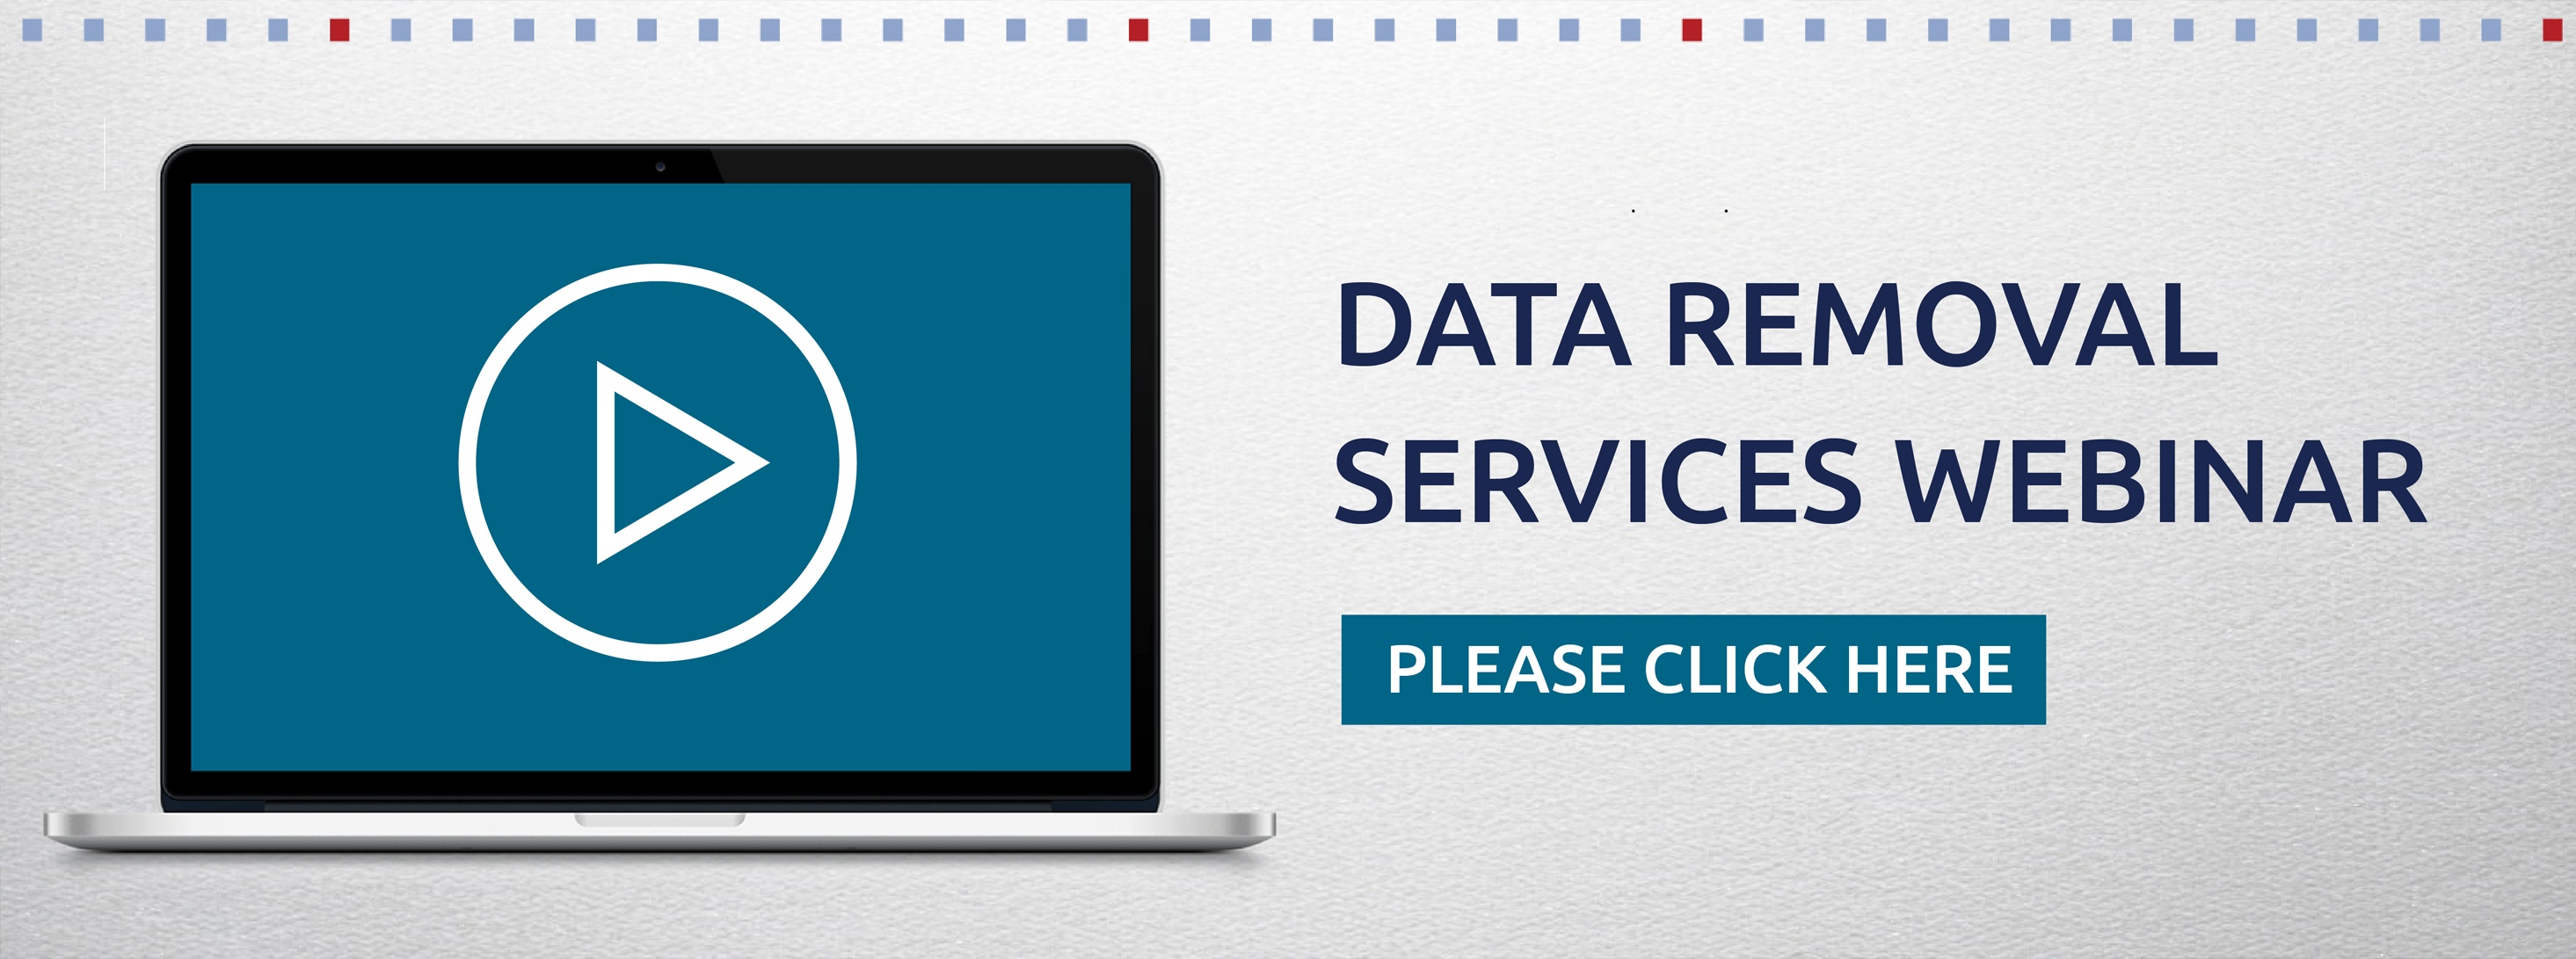 Data Removal Services Webinar